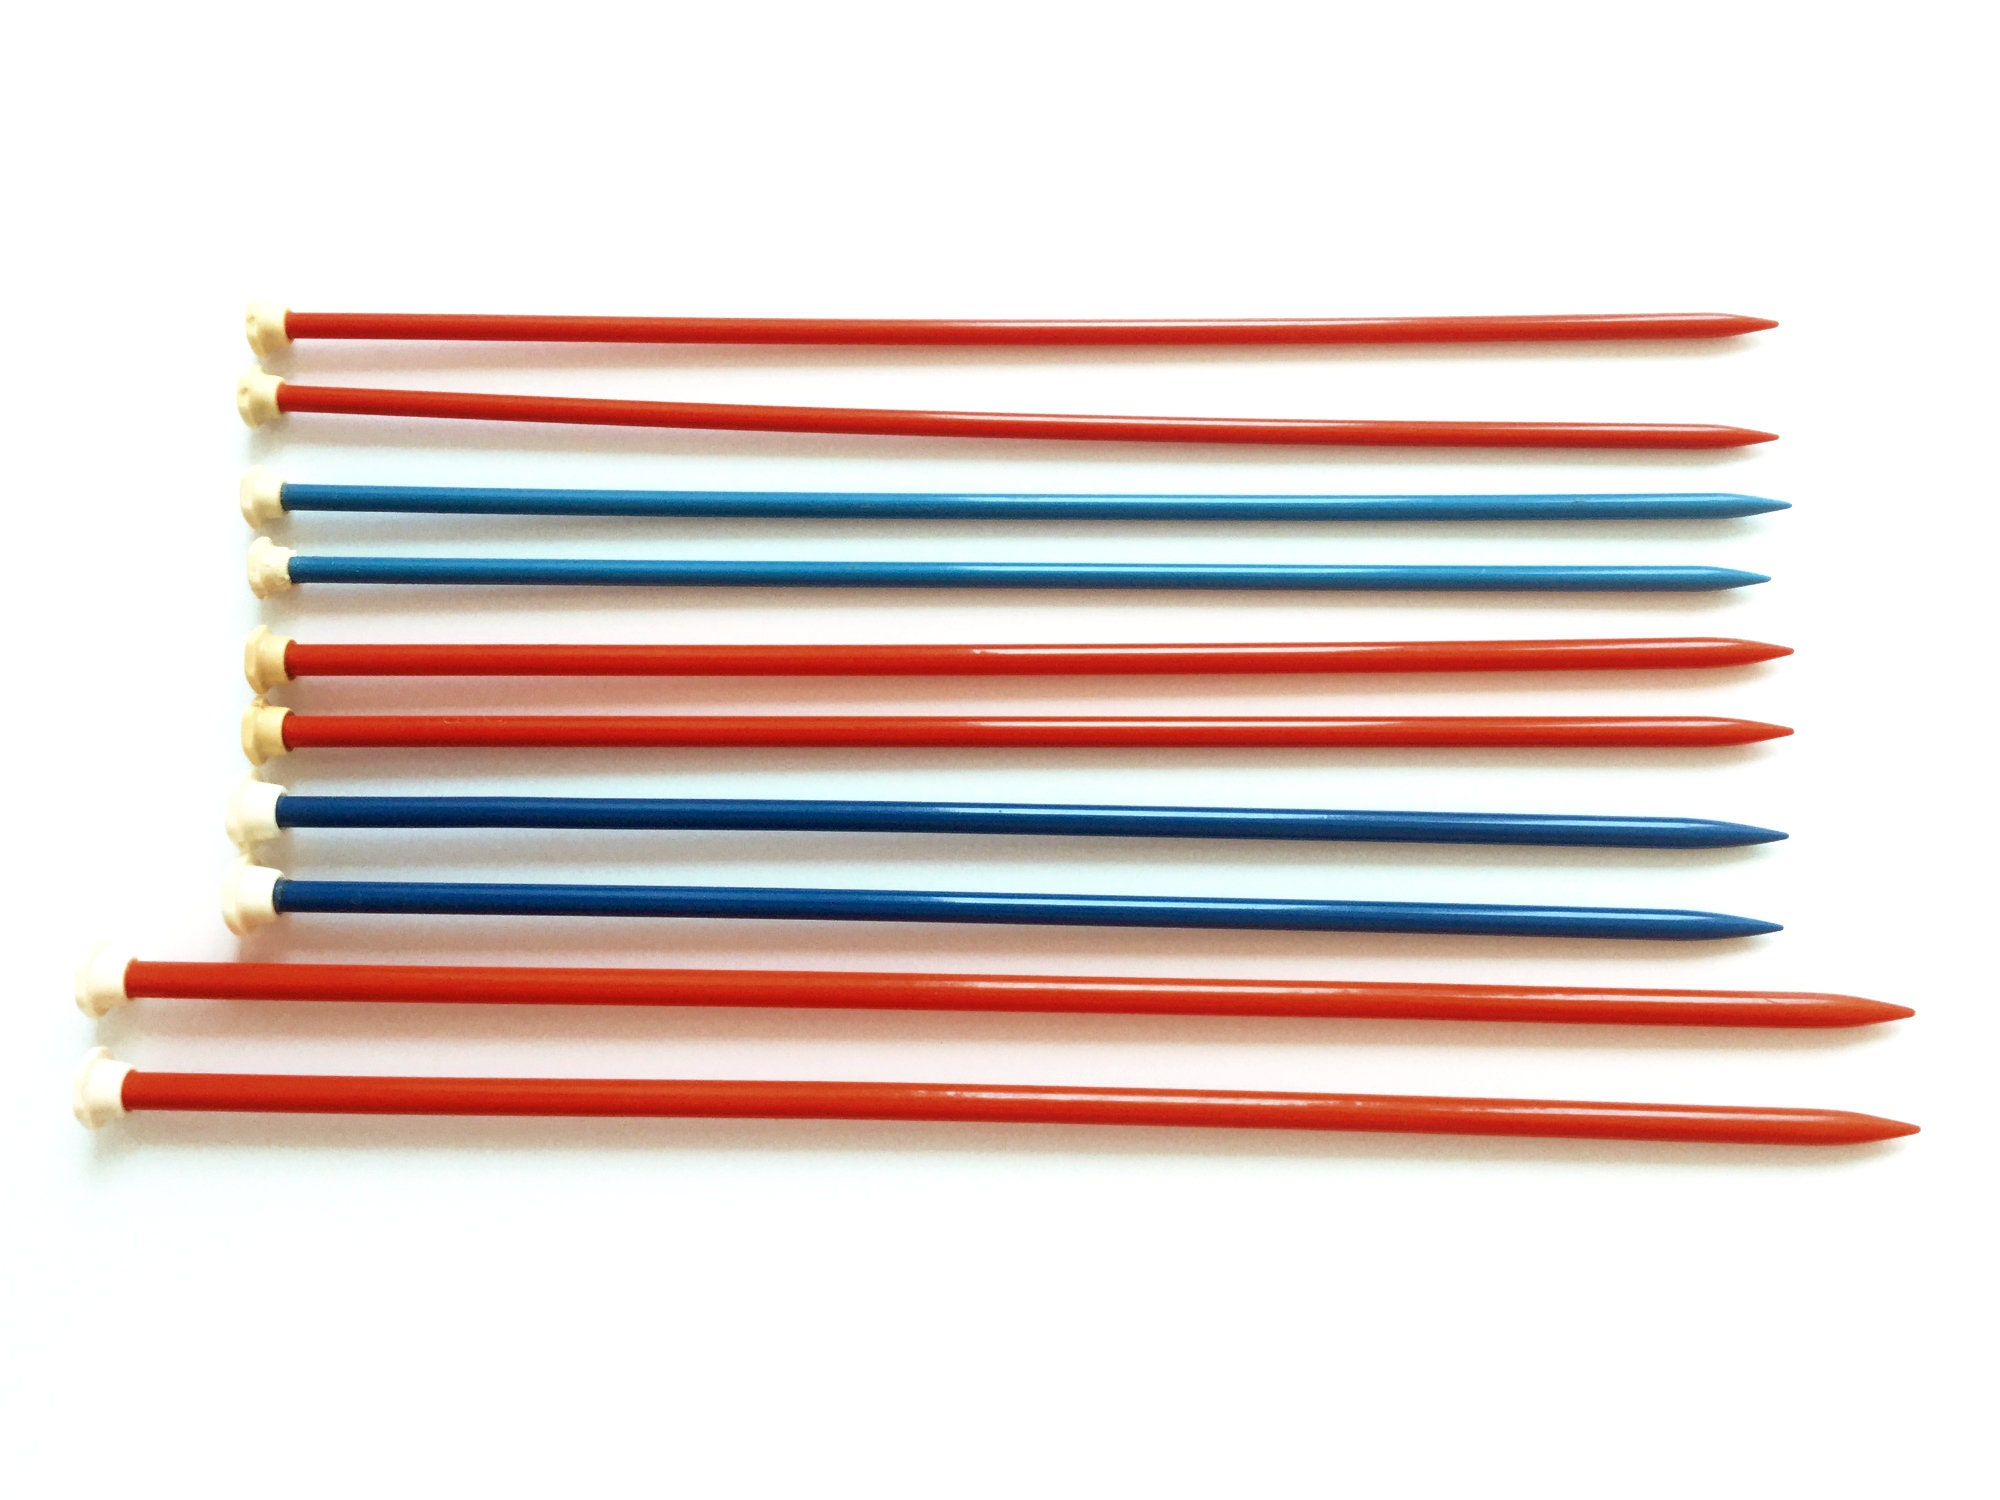 Vintage knitting needles JMRA various sizes red or blue | Etsy